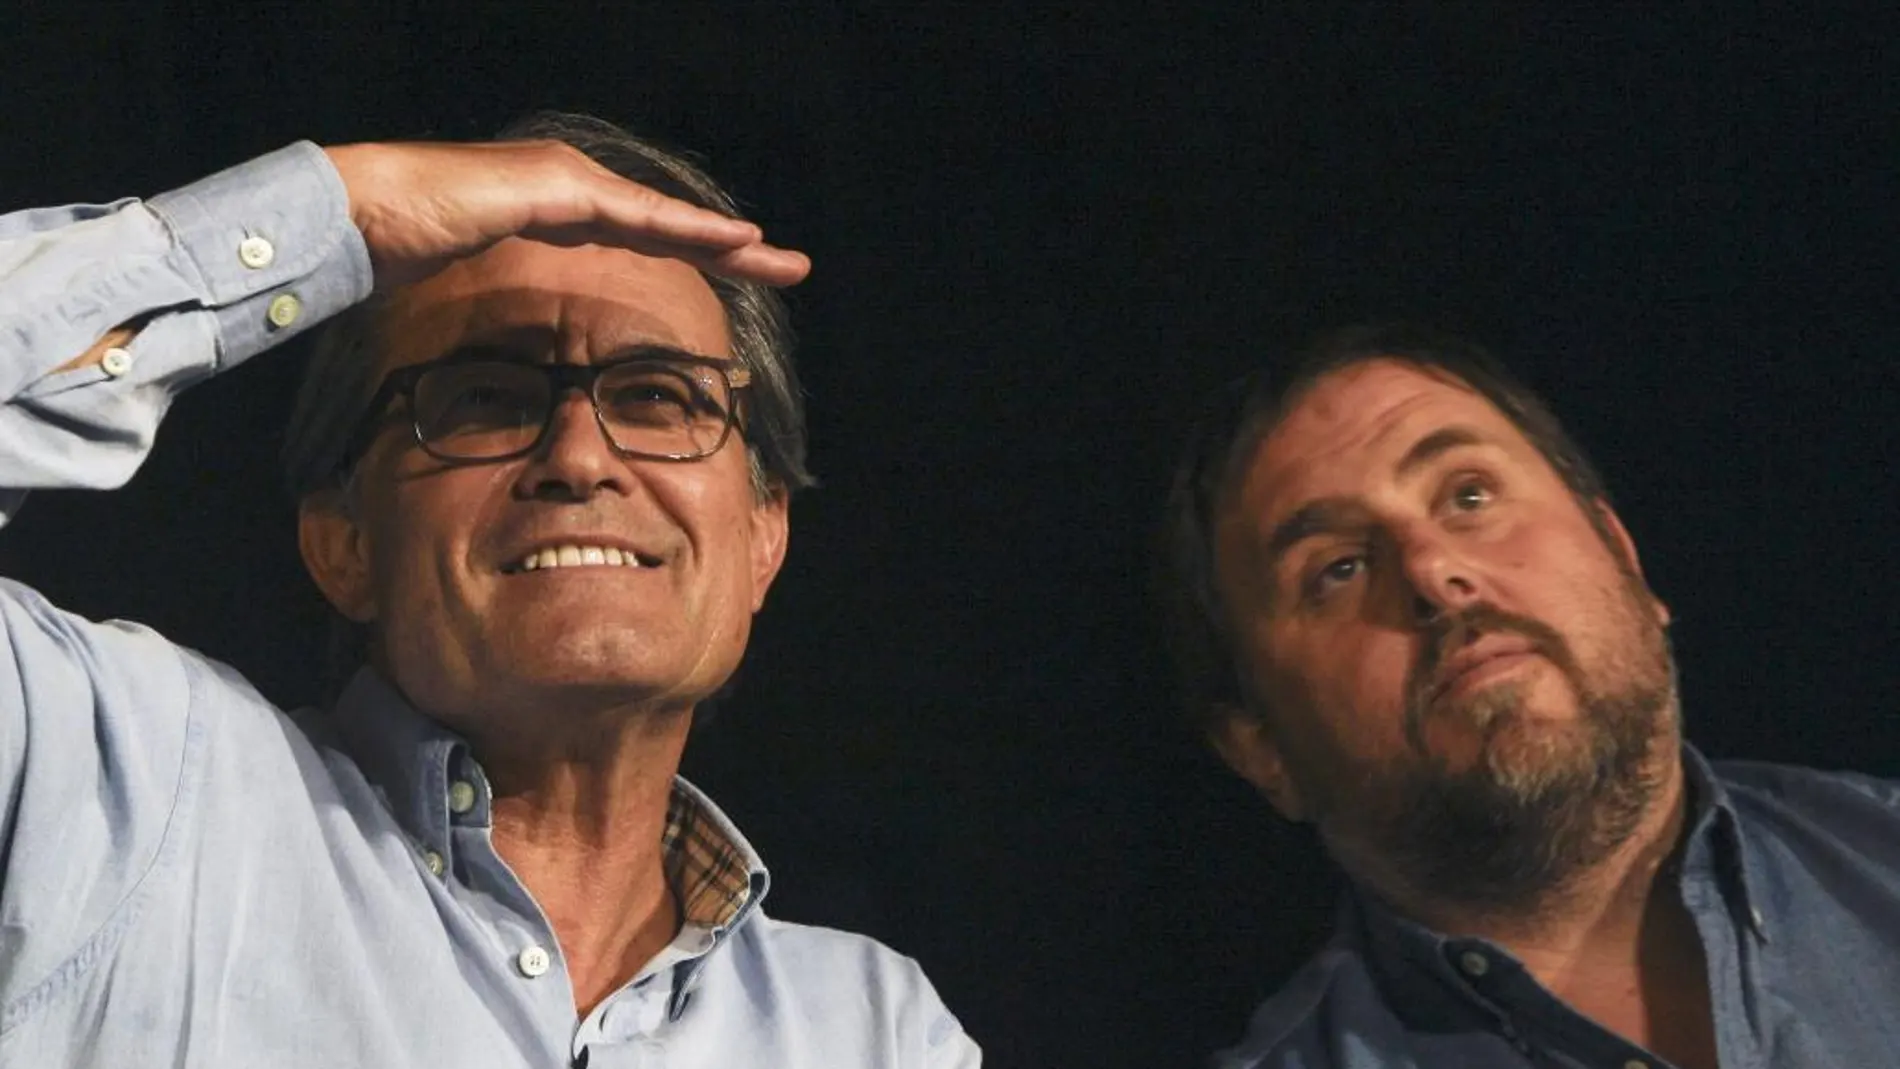 El president de la Generalitat en funciones, Artur Mas, junto al líder de ERC, Oriol Junqueras